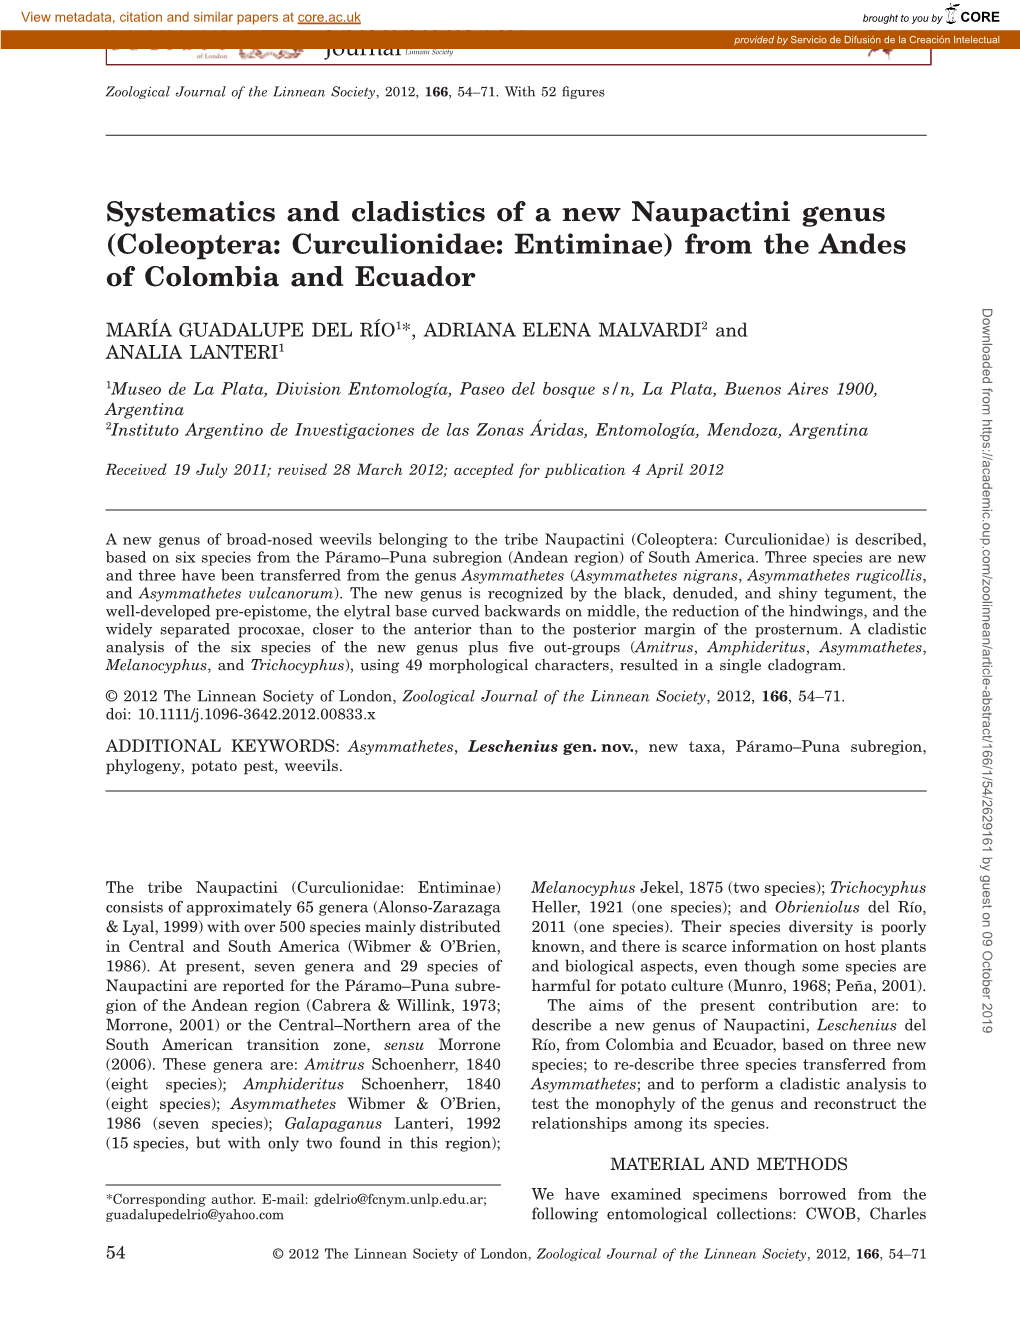 Systematics and Cladistics of a New Naupactini Genus